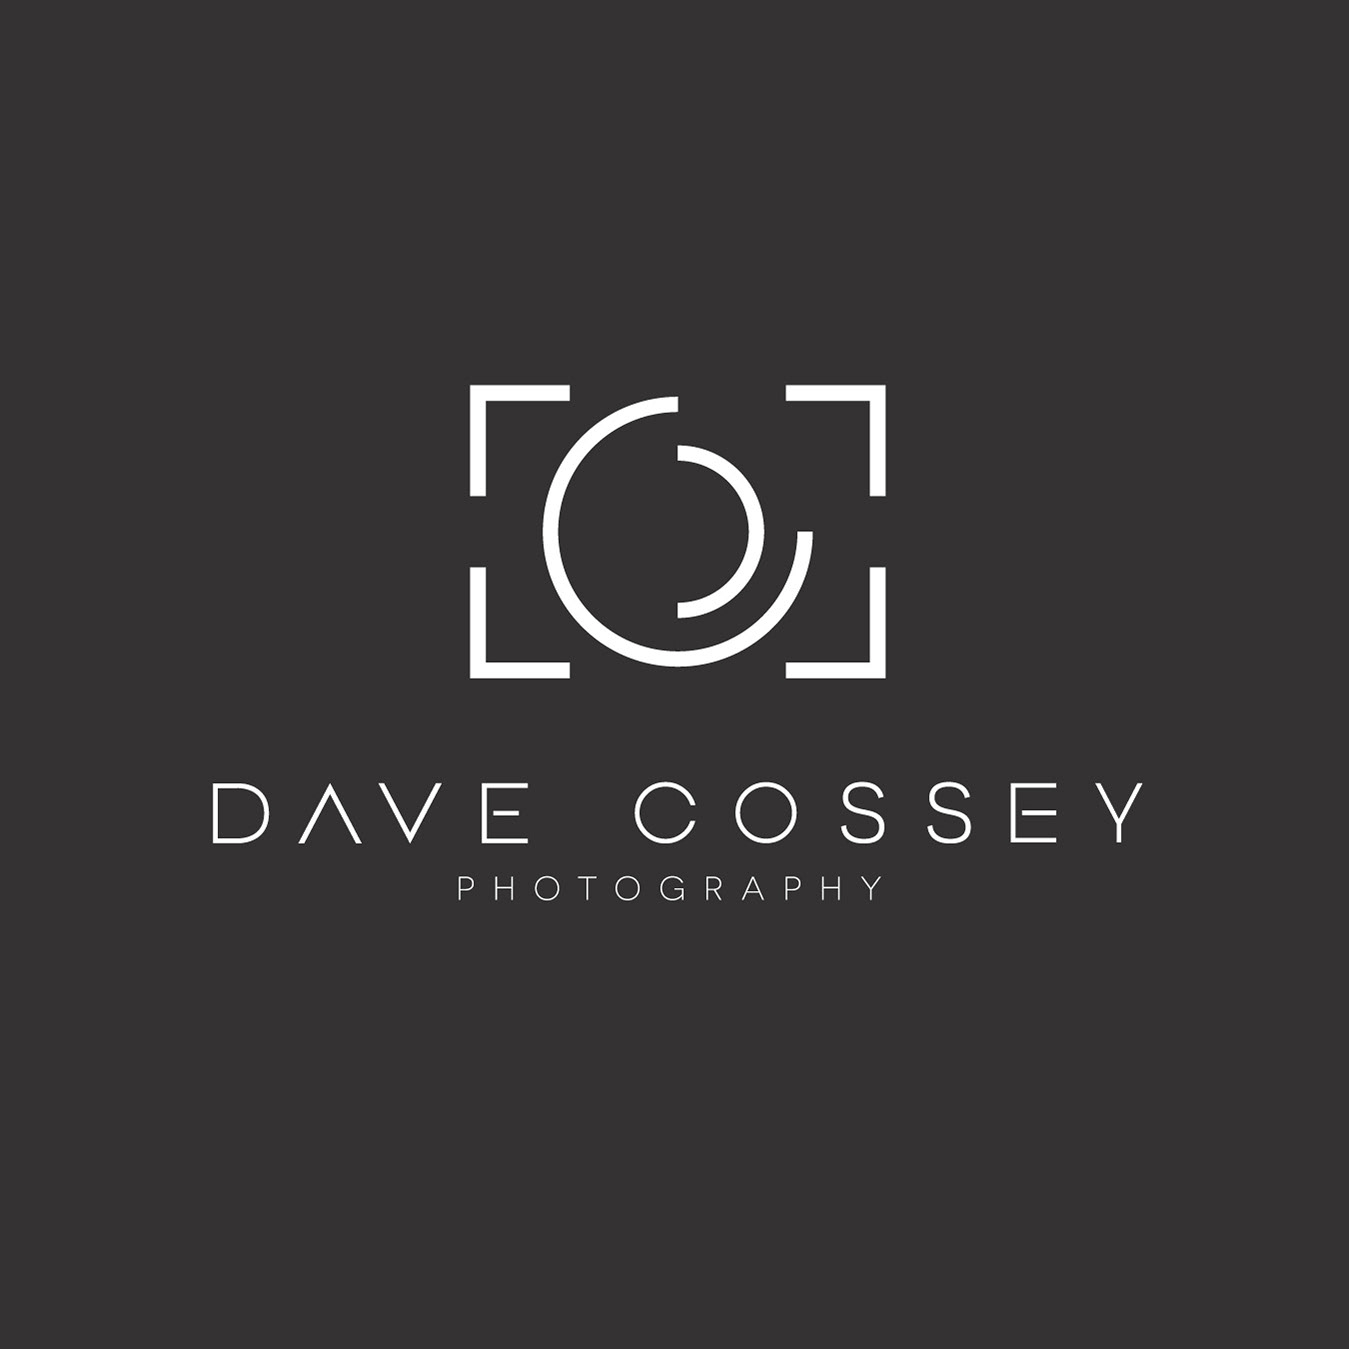 David Cossey